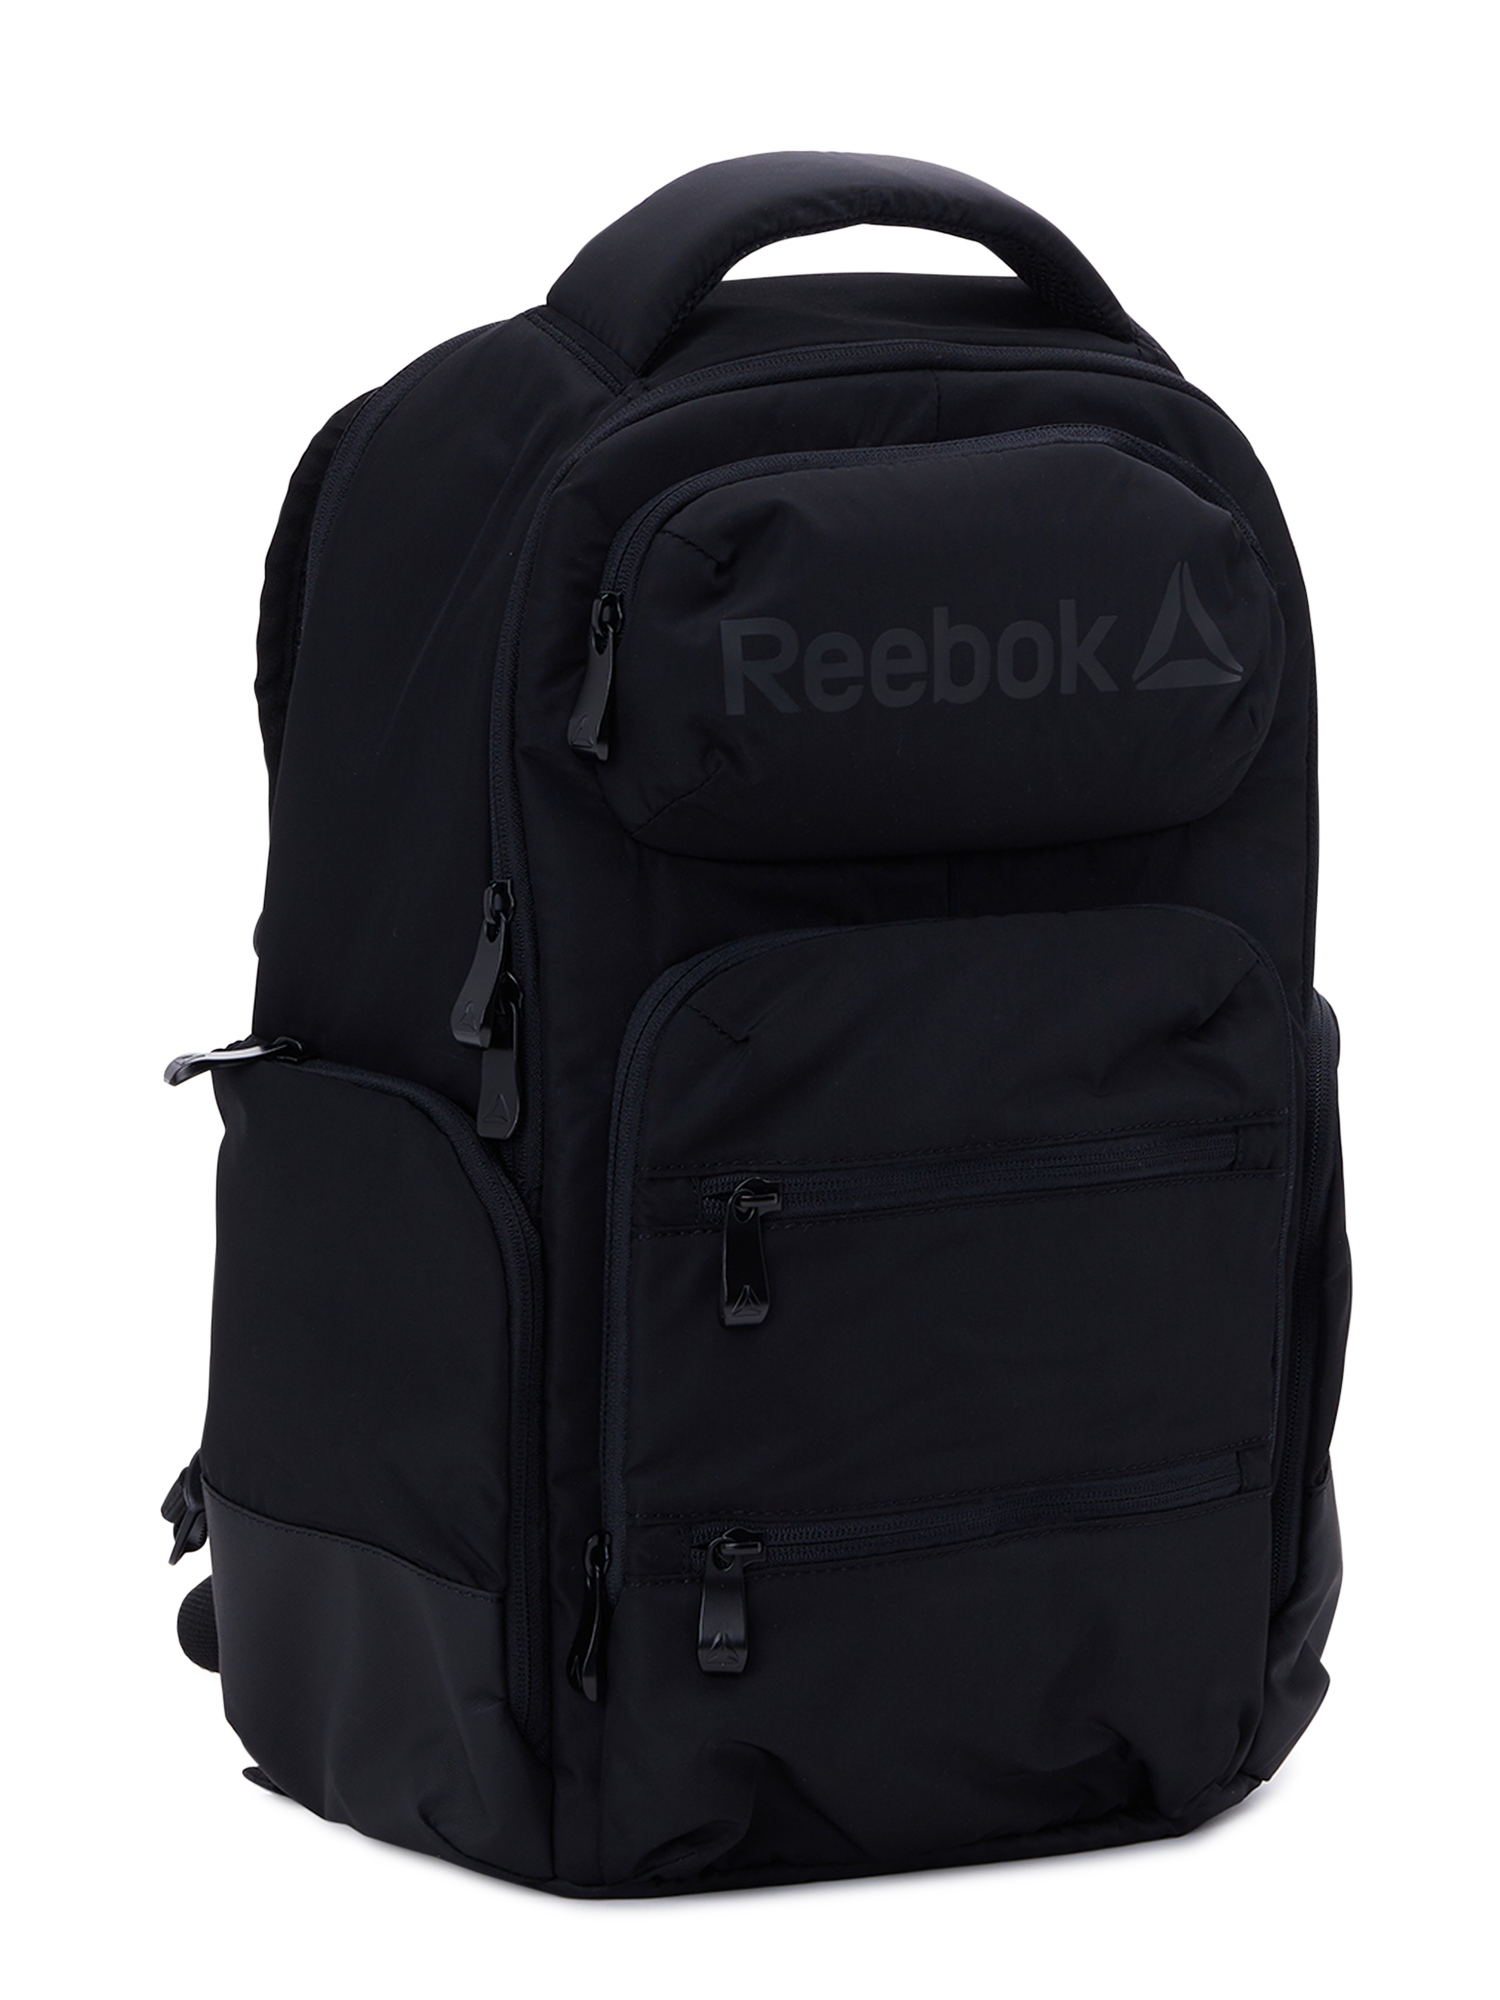 Reebok Unisex Adult Winter 16" Laptop Backpack, Black - image 5 of 6